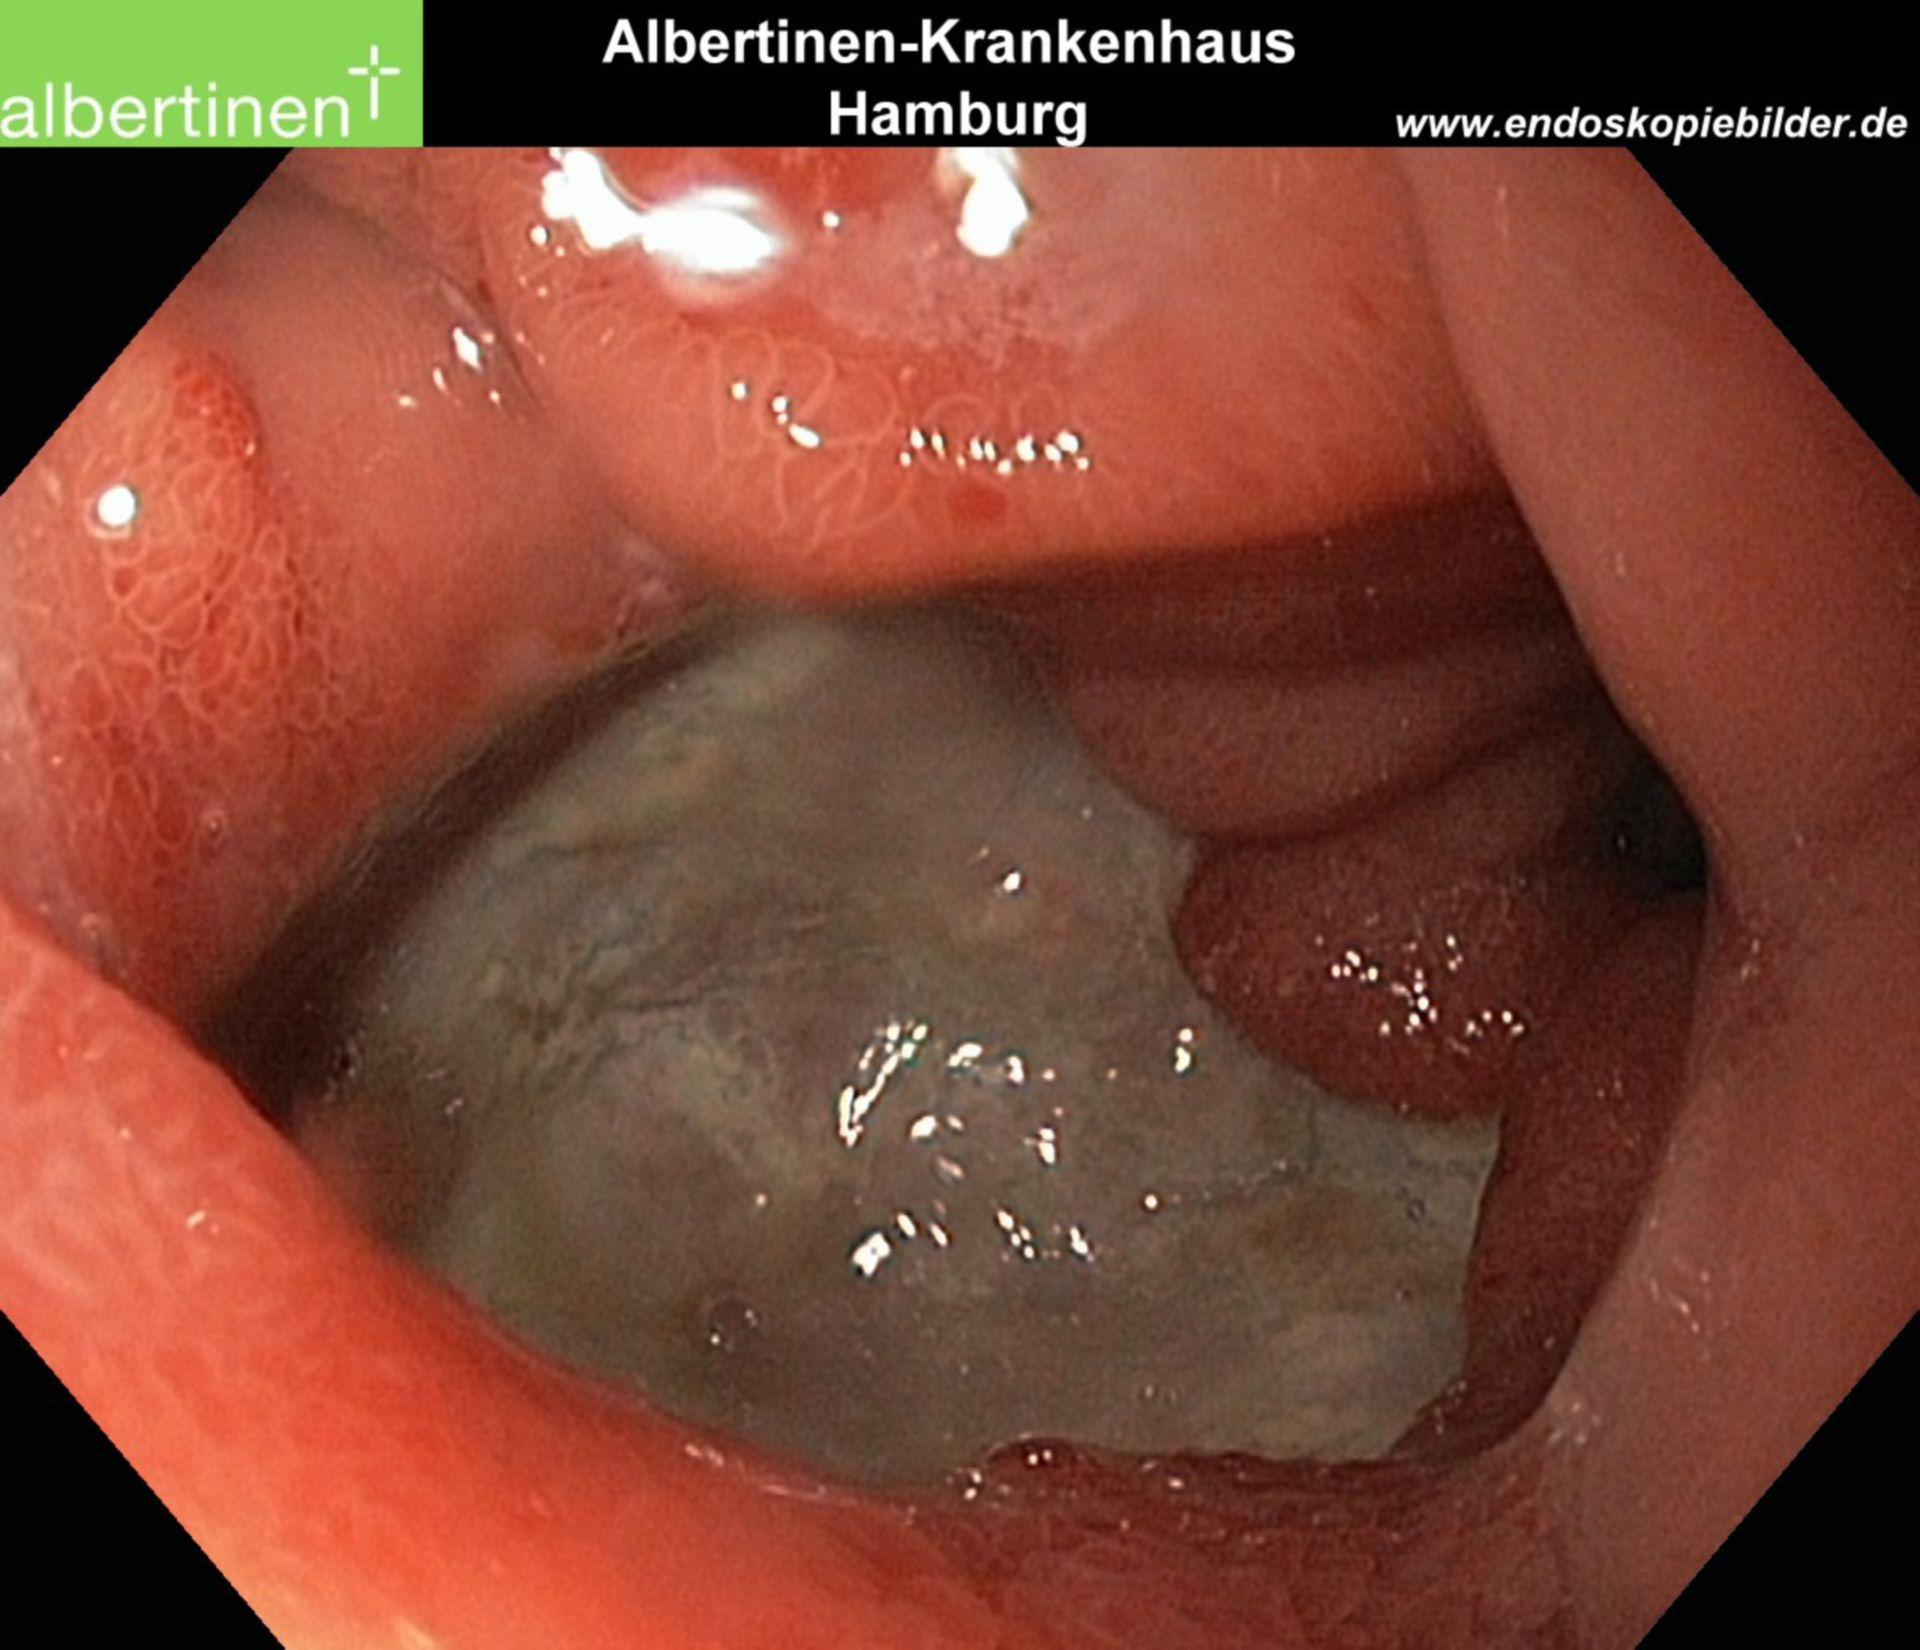 Penetrating duodenal ulcer